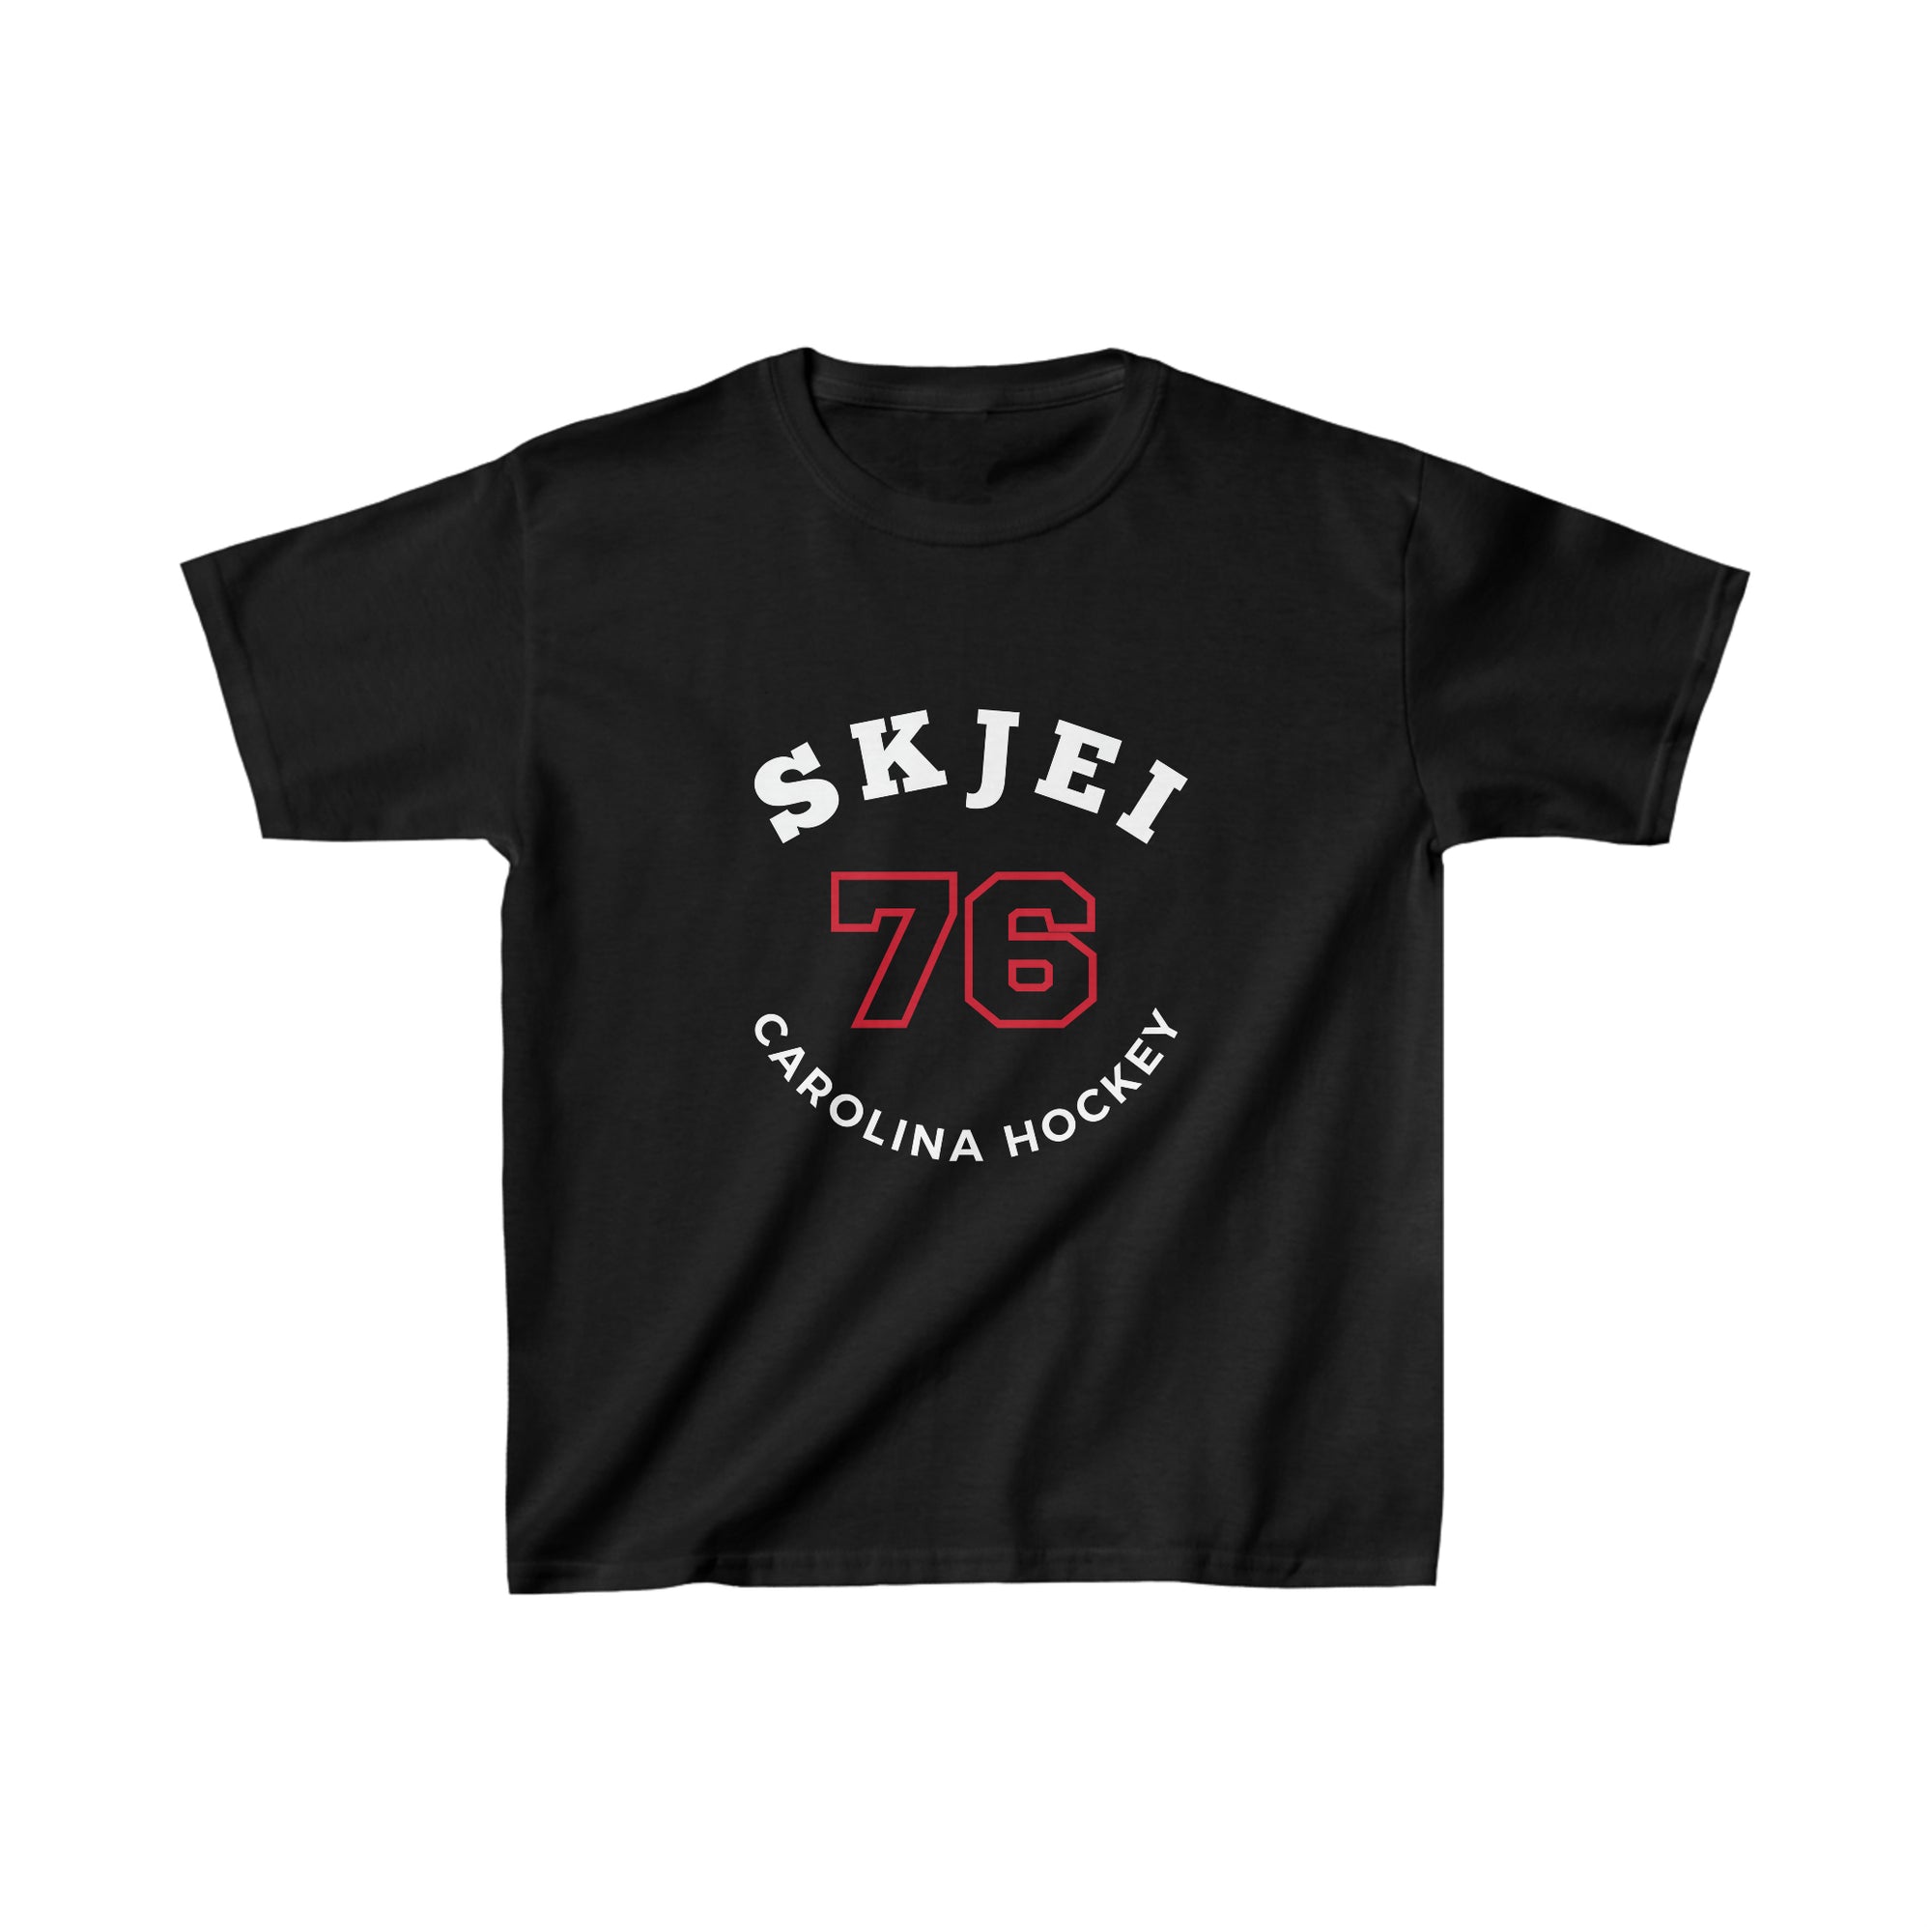 Skjei 76 Carolina Hockey Number Arch Design Kids Tee